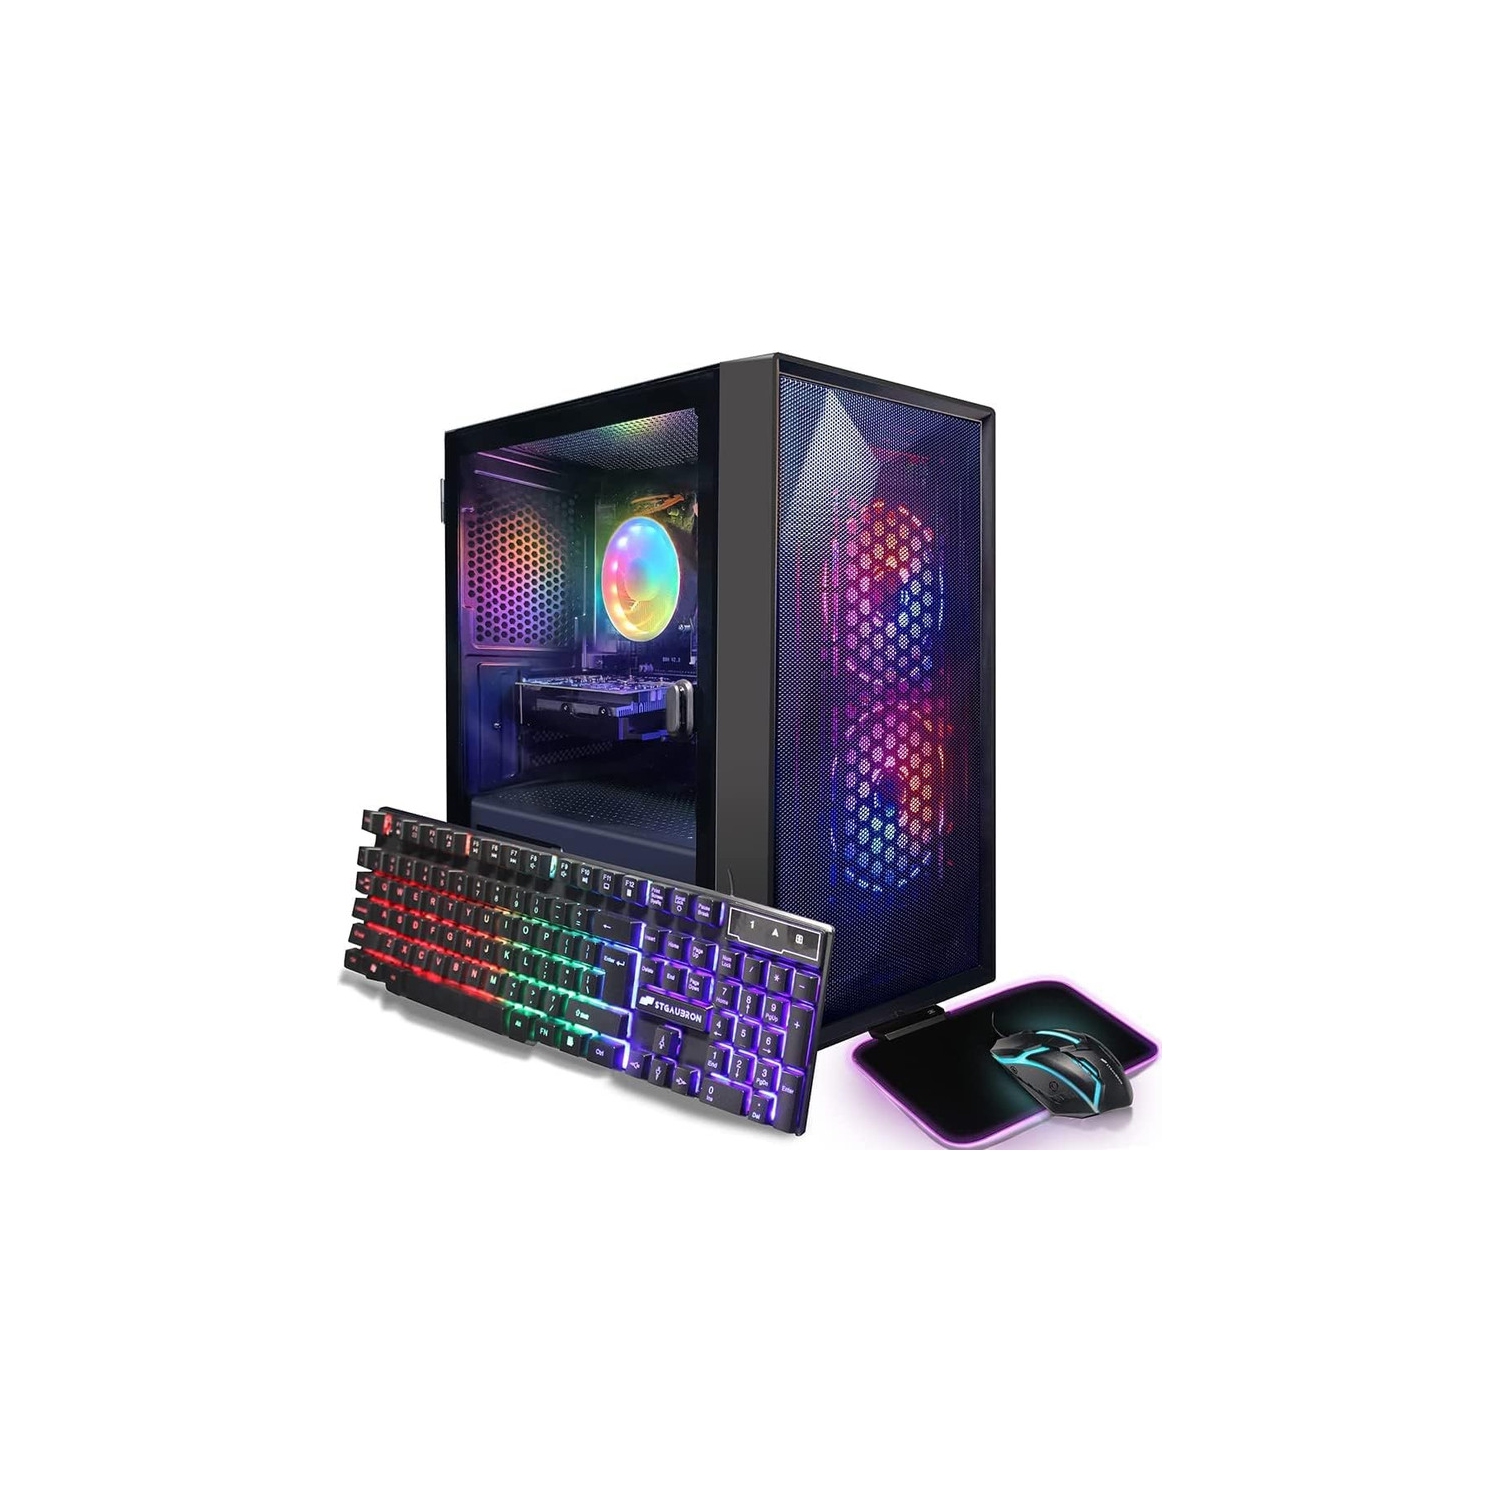 STGAubron Gaming Desktop PC, Intel Core I5 3.3Ghz up to 3.7Ghz, AMD Radeon RX 550 4G GDDR5, 16G Ram, 512G SSD, WiFi, BT 5.0, RGB Fan x 3, RGB KB&MS&MS Pad, W10H64